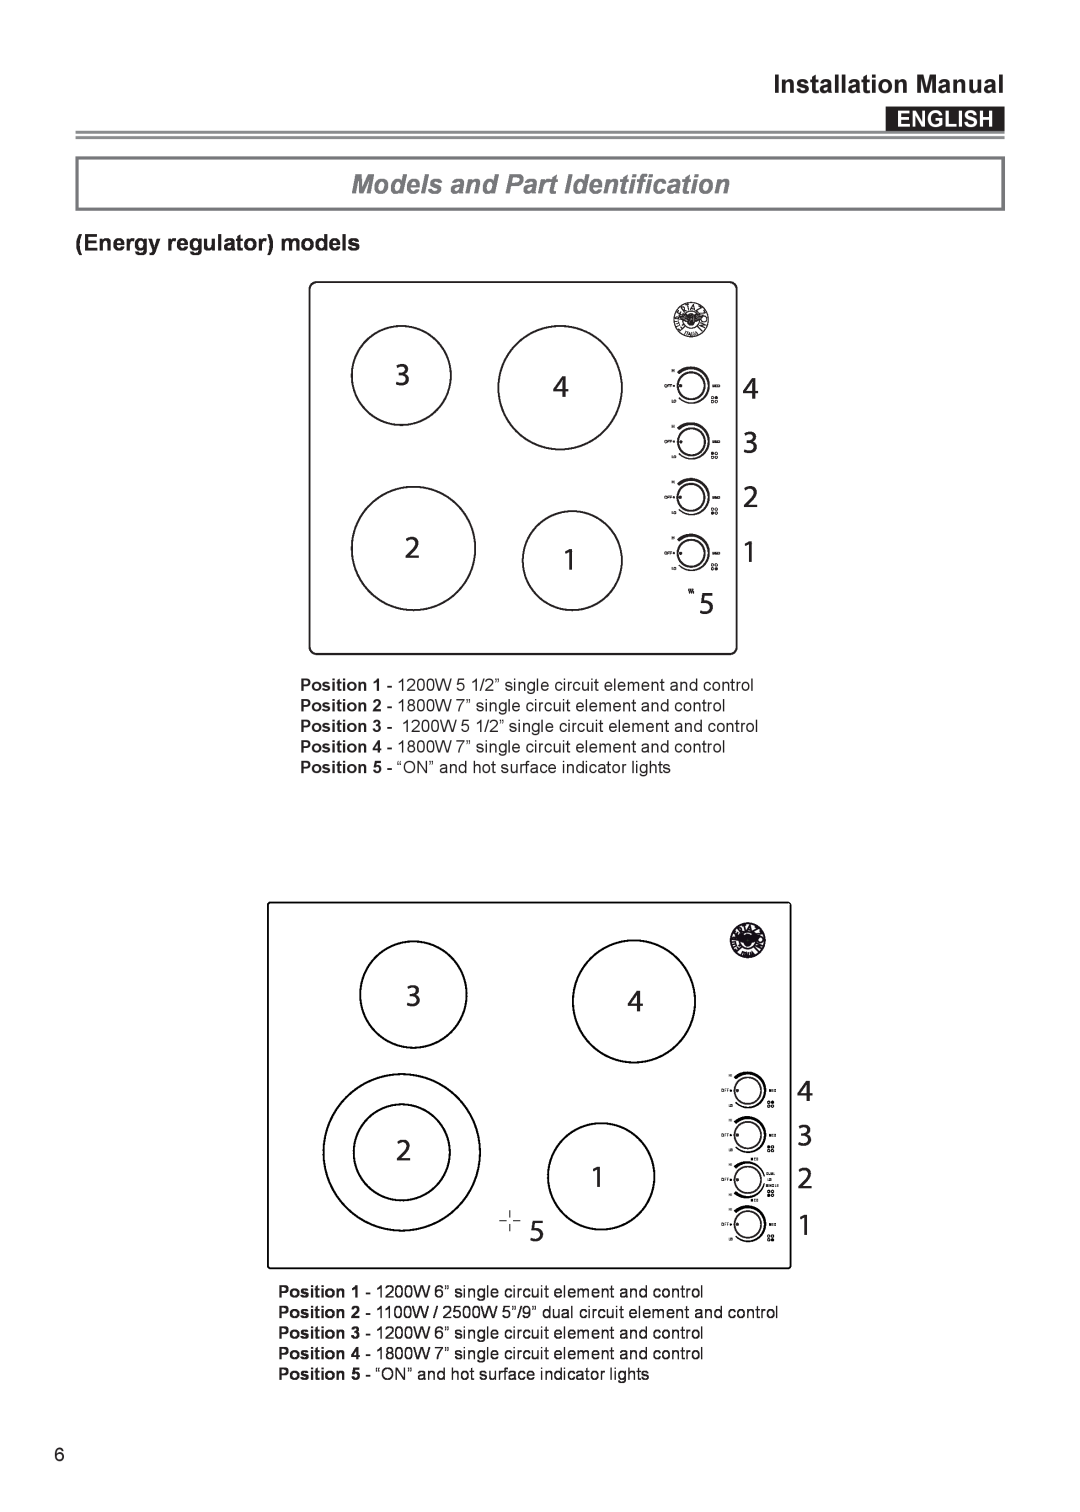 Bertazzoni P30 CER NE manual Models and Part Identification, Energy regulator models, UseInstallation& Care Manual, English 